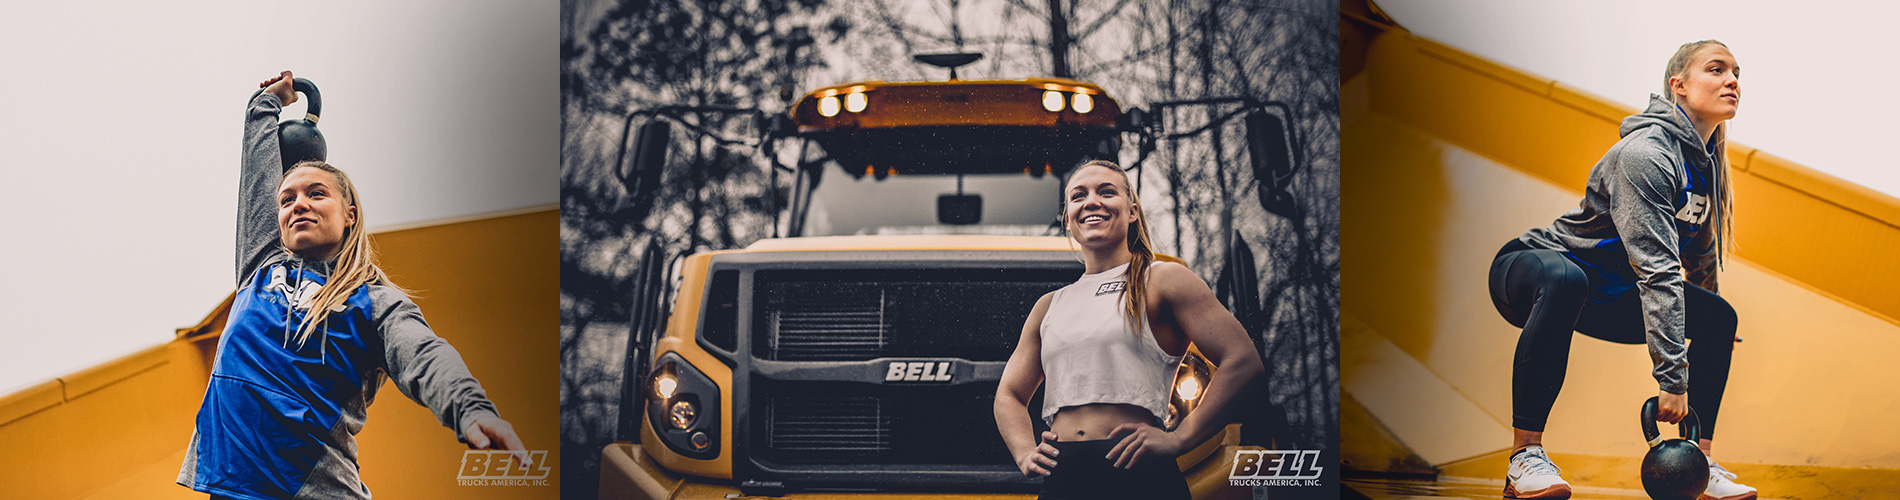 Bell Trucks America sponsors Michelle Basnett in the 2019 Crossfit Cape Town games